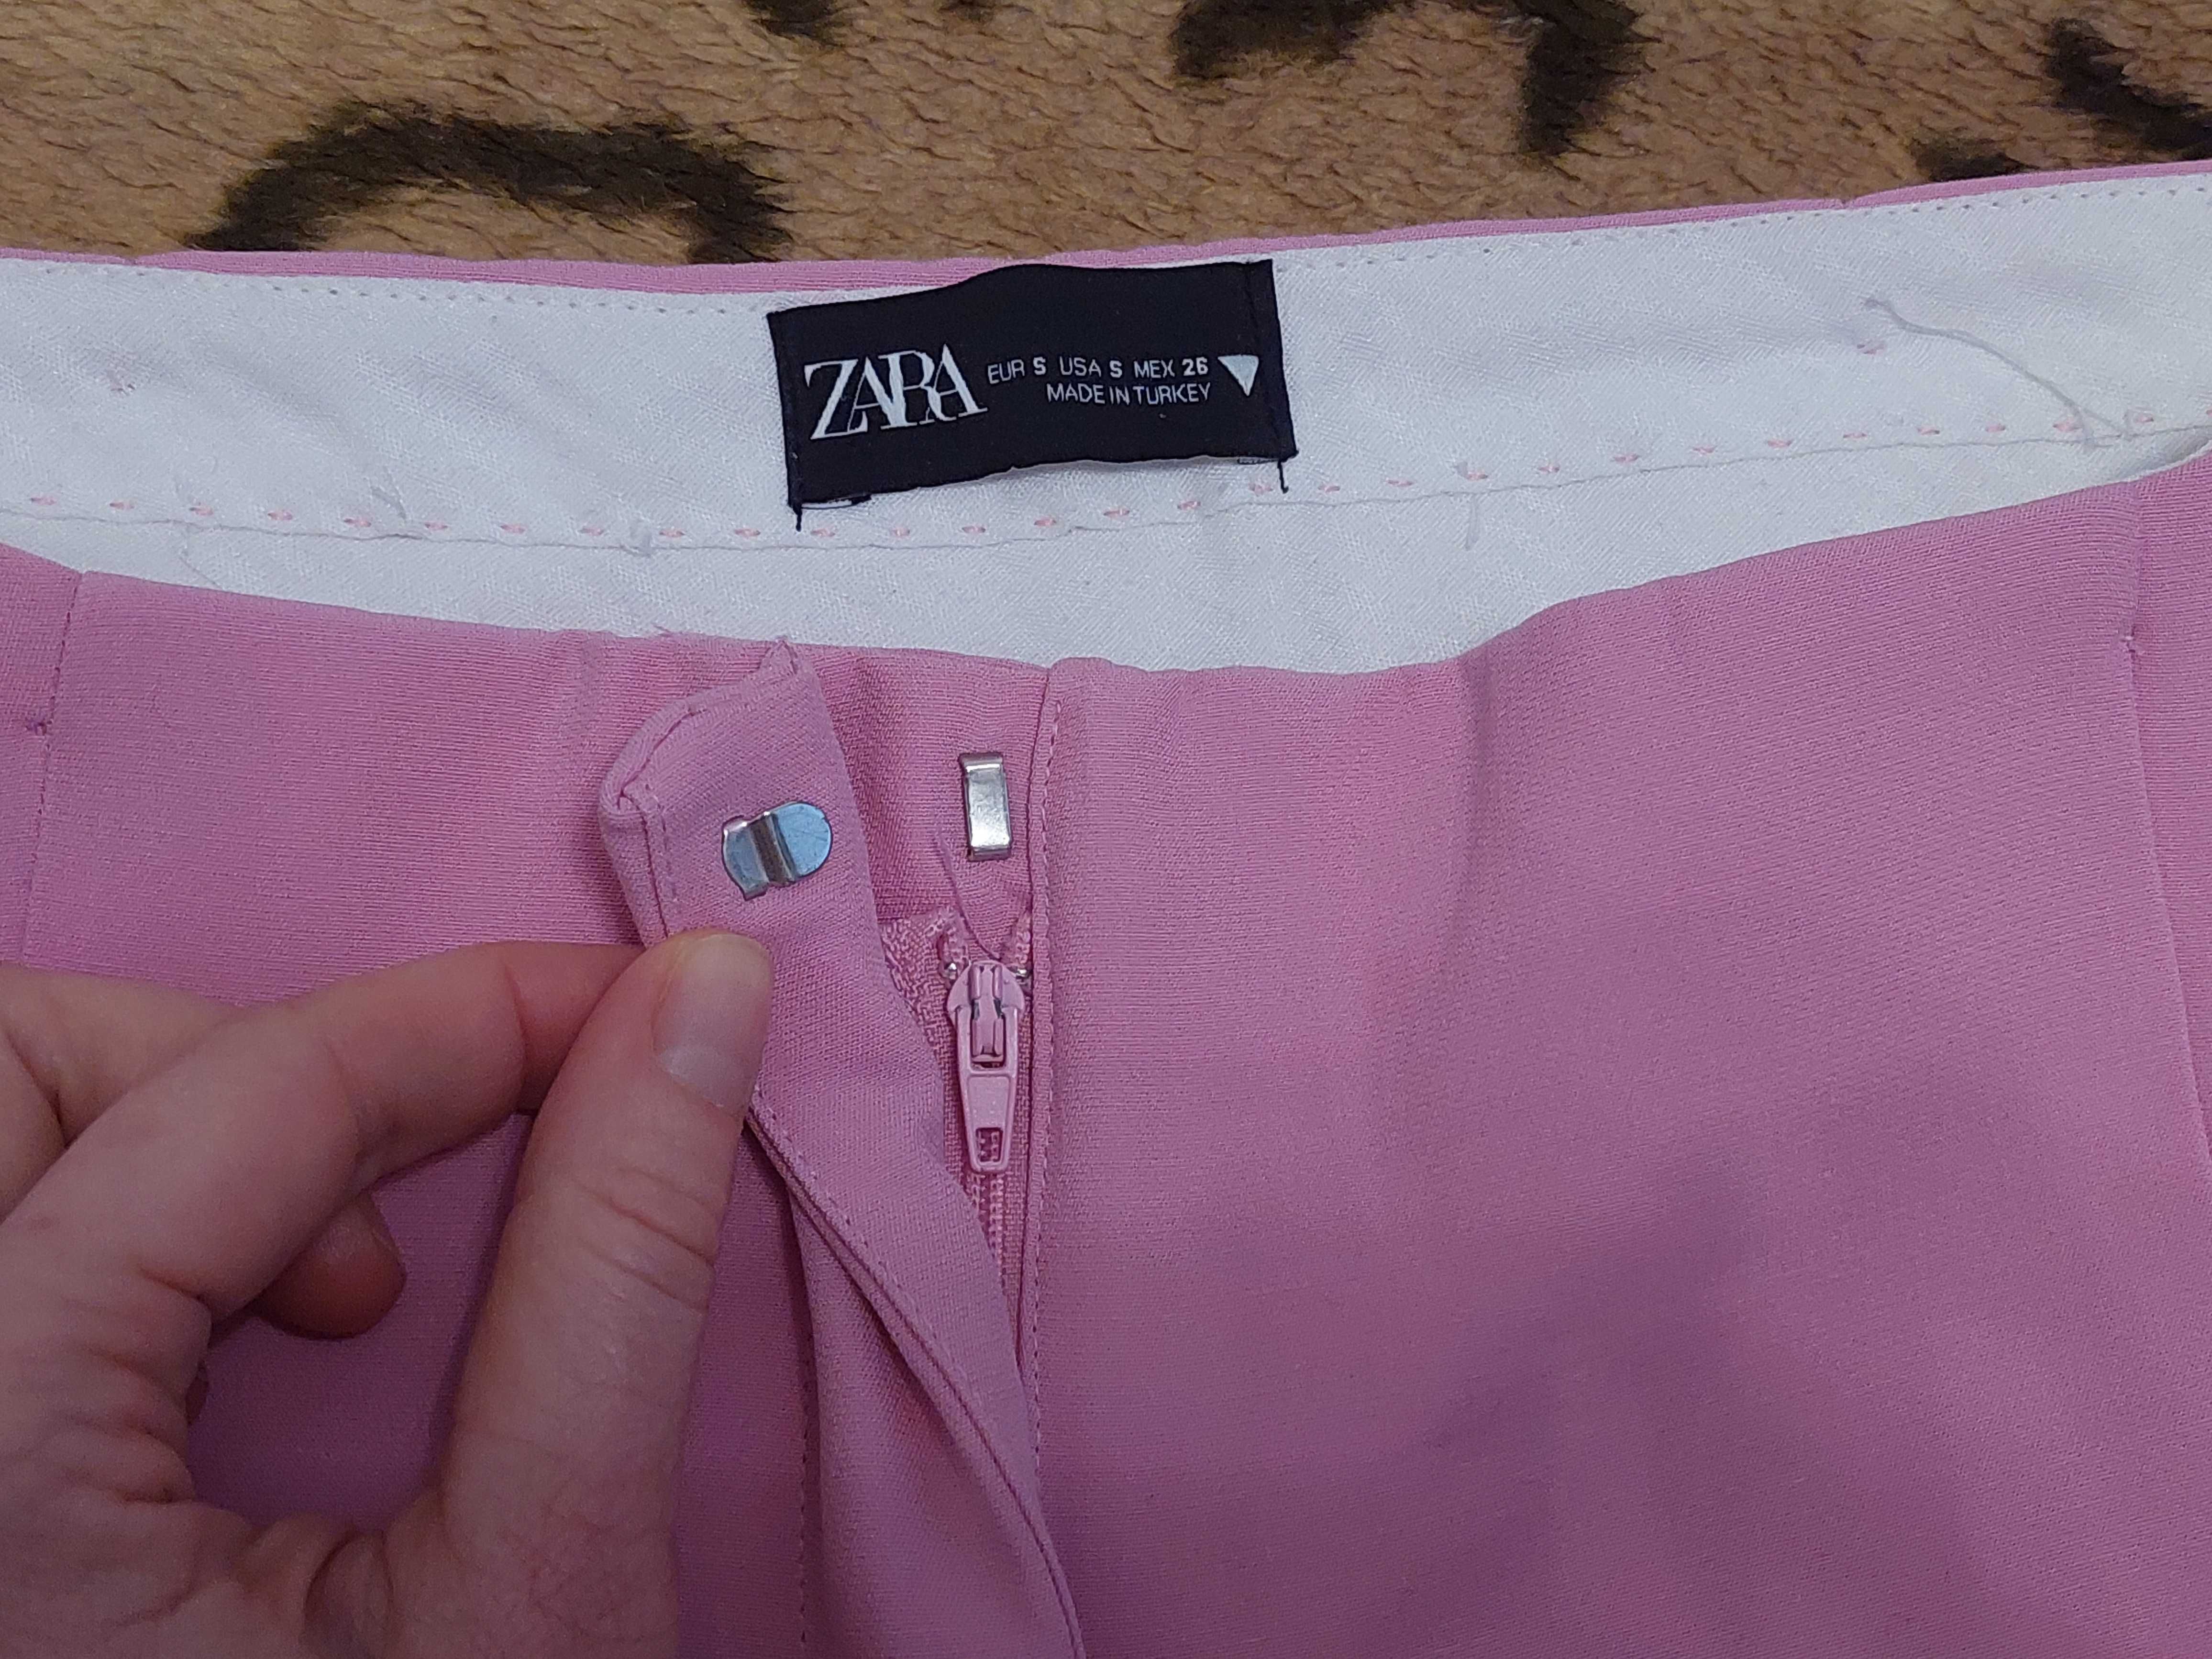 Розовая юбка zara